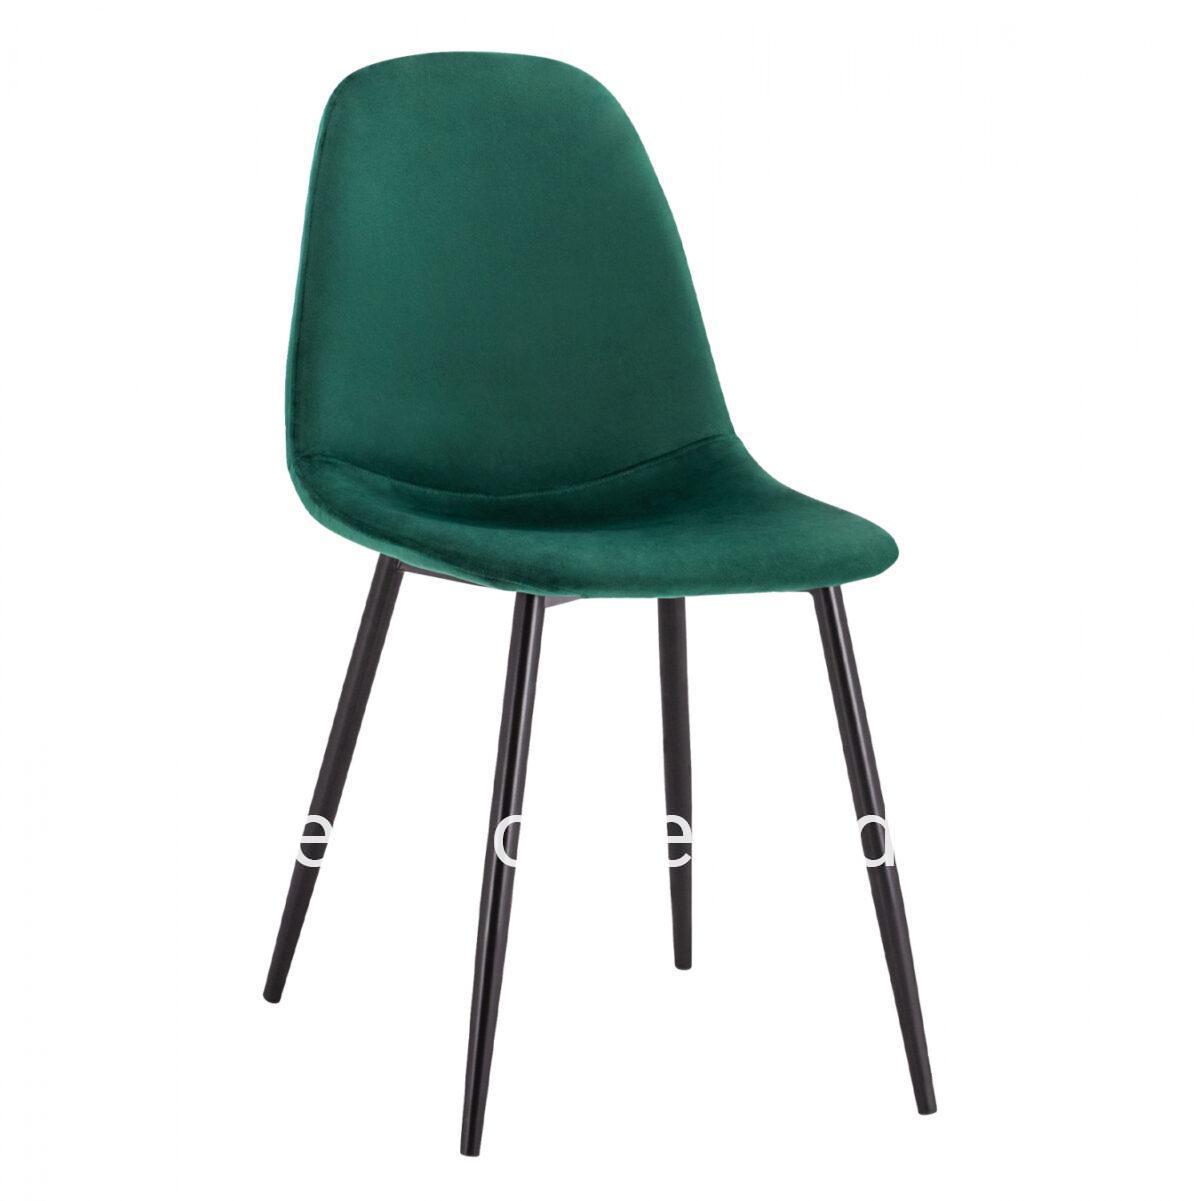 Dining Chair Leonardo Cypress Green Velvet with metallic legs HM00100.23 45x53x85 cm.